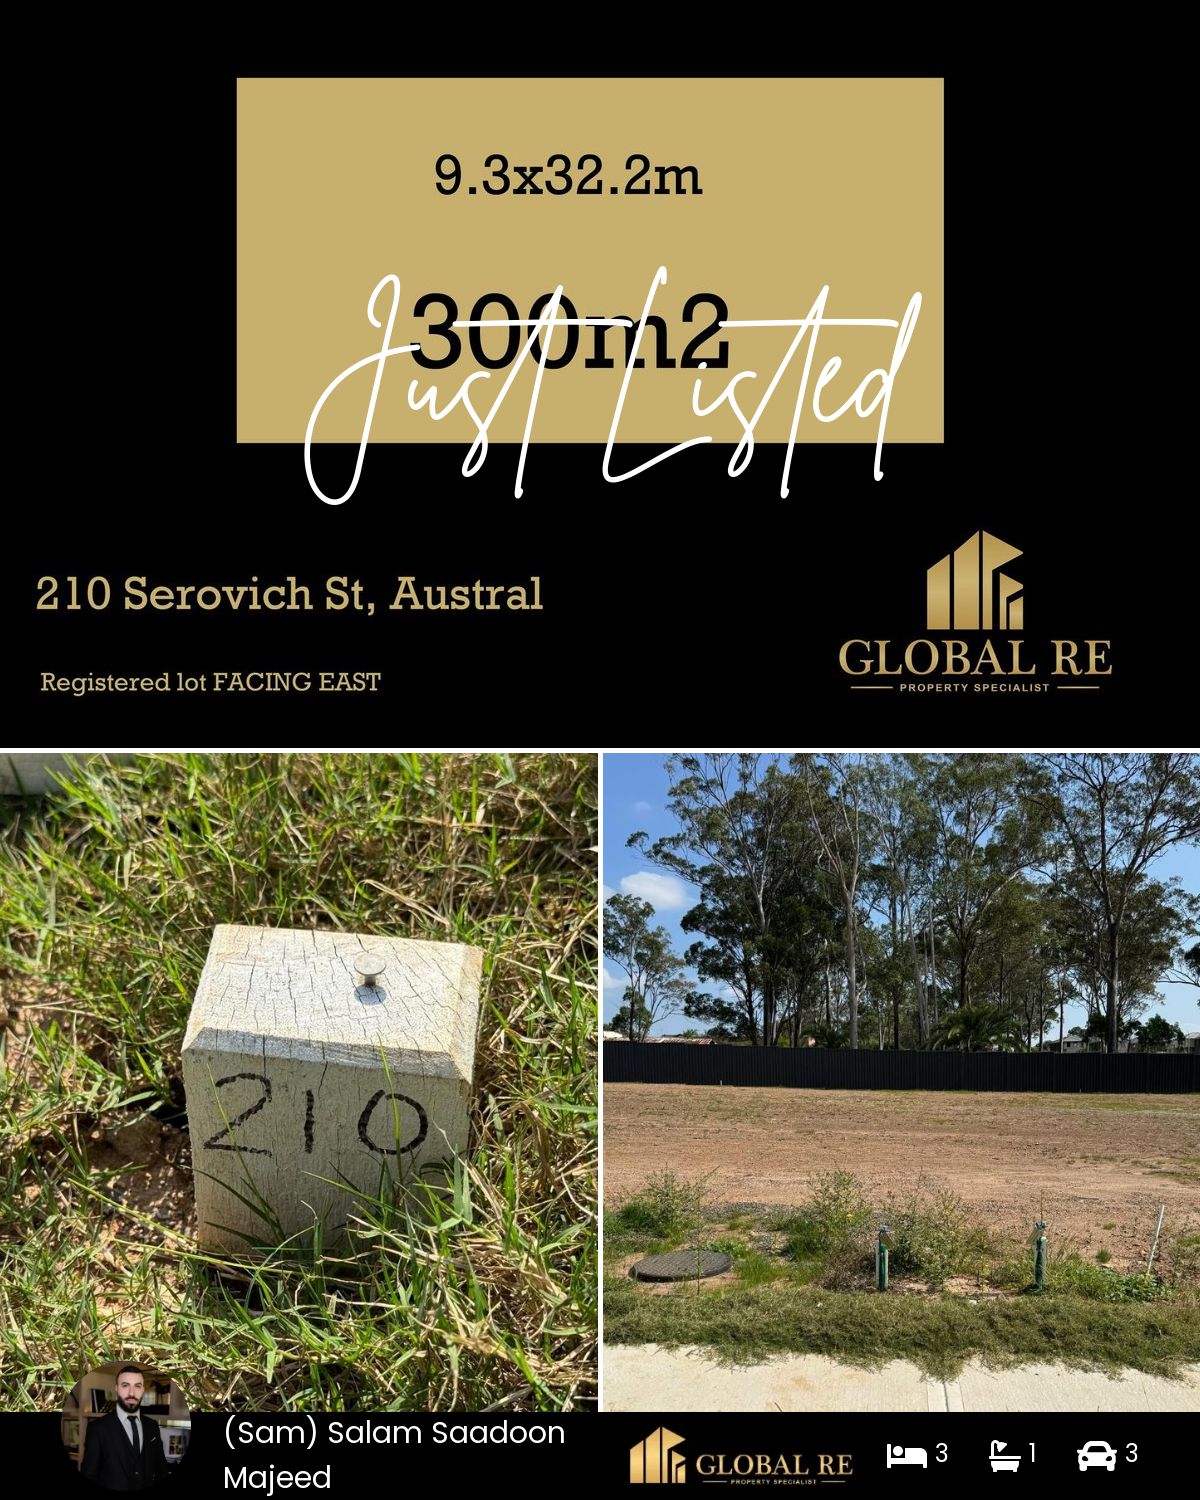 210 Serovich Street, Austral, NSW 2179 | Realty.com.au